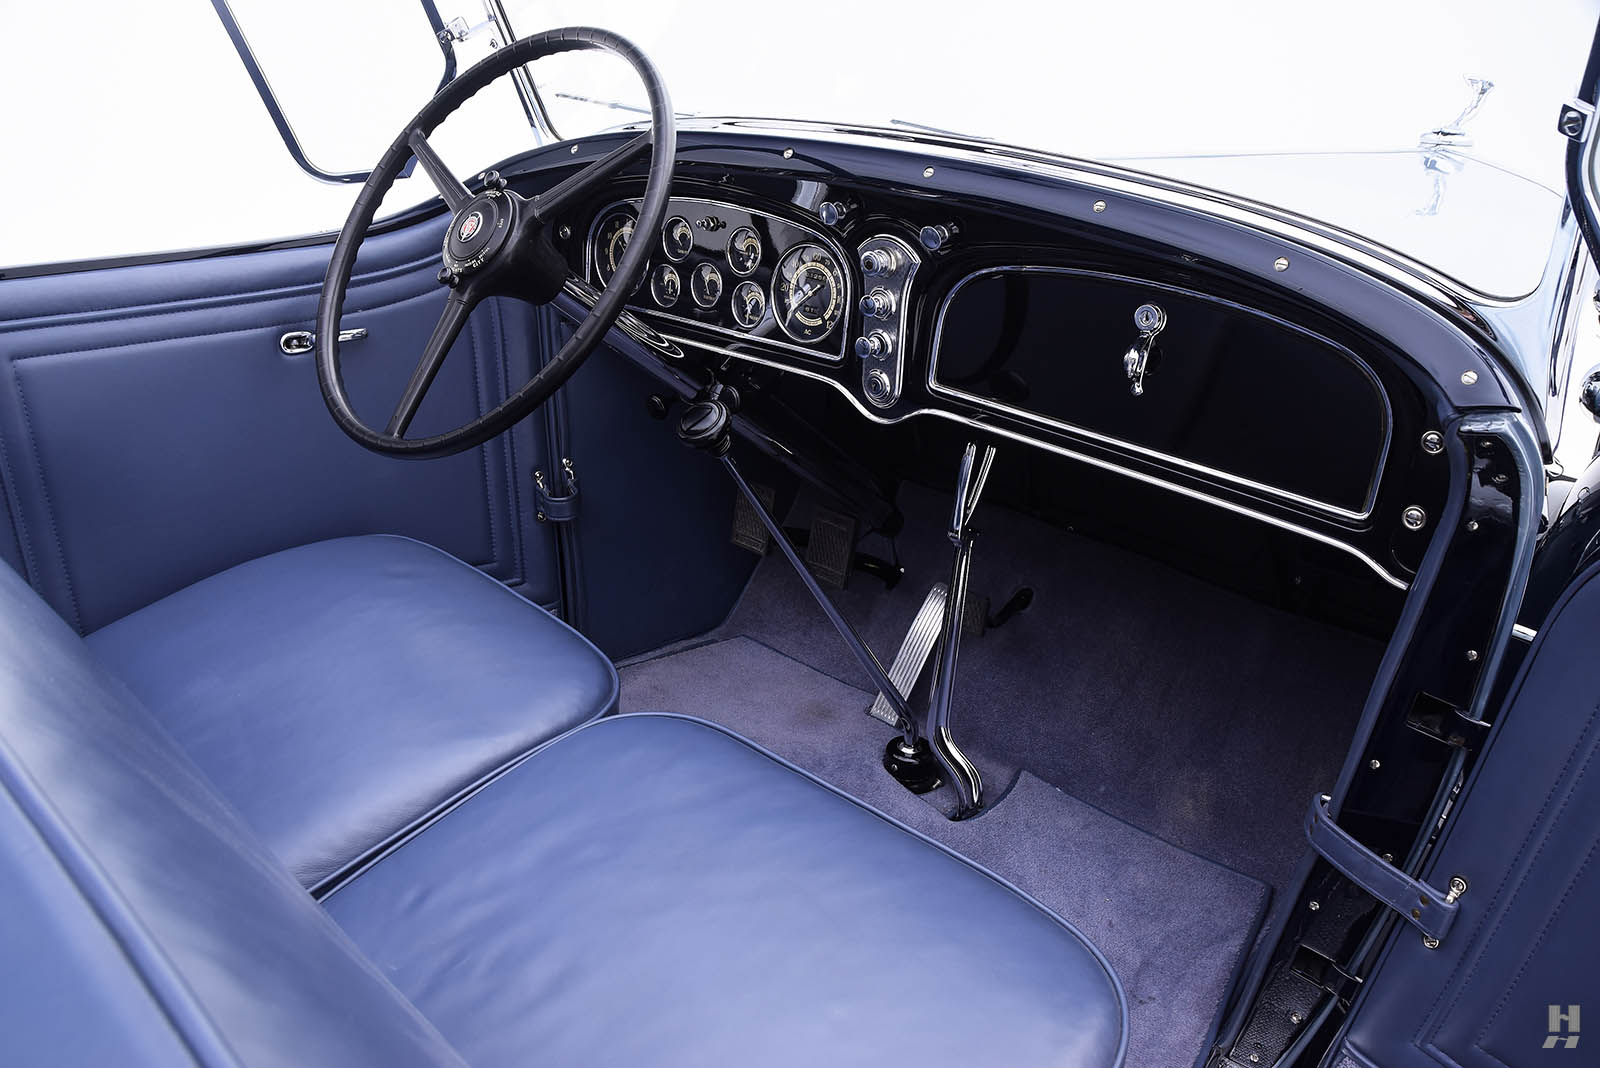 1935 cadillac model 452d series 60 fleetwood (vee windshield)